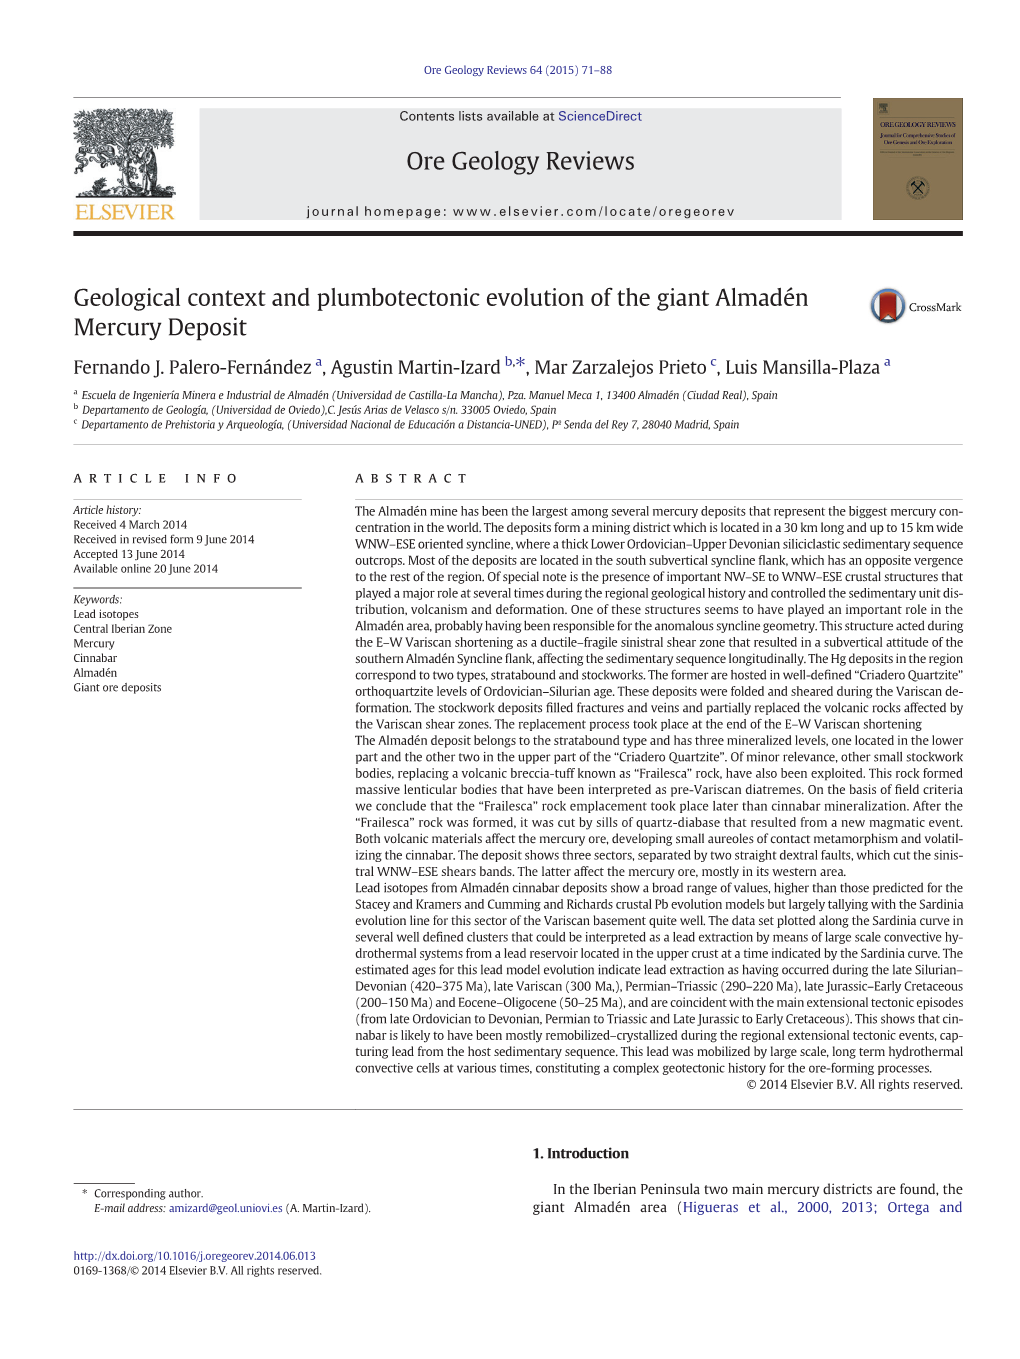 Geological Context and Plumbotectonic Evolution of the Giant Almadén Mercury Deposit